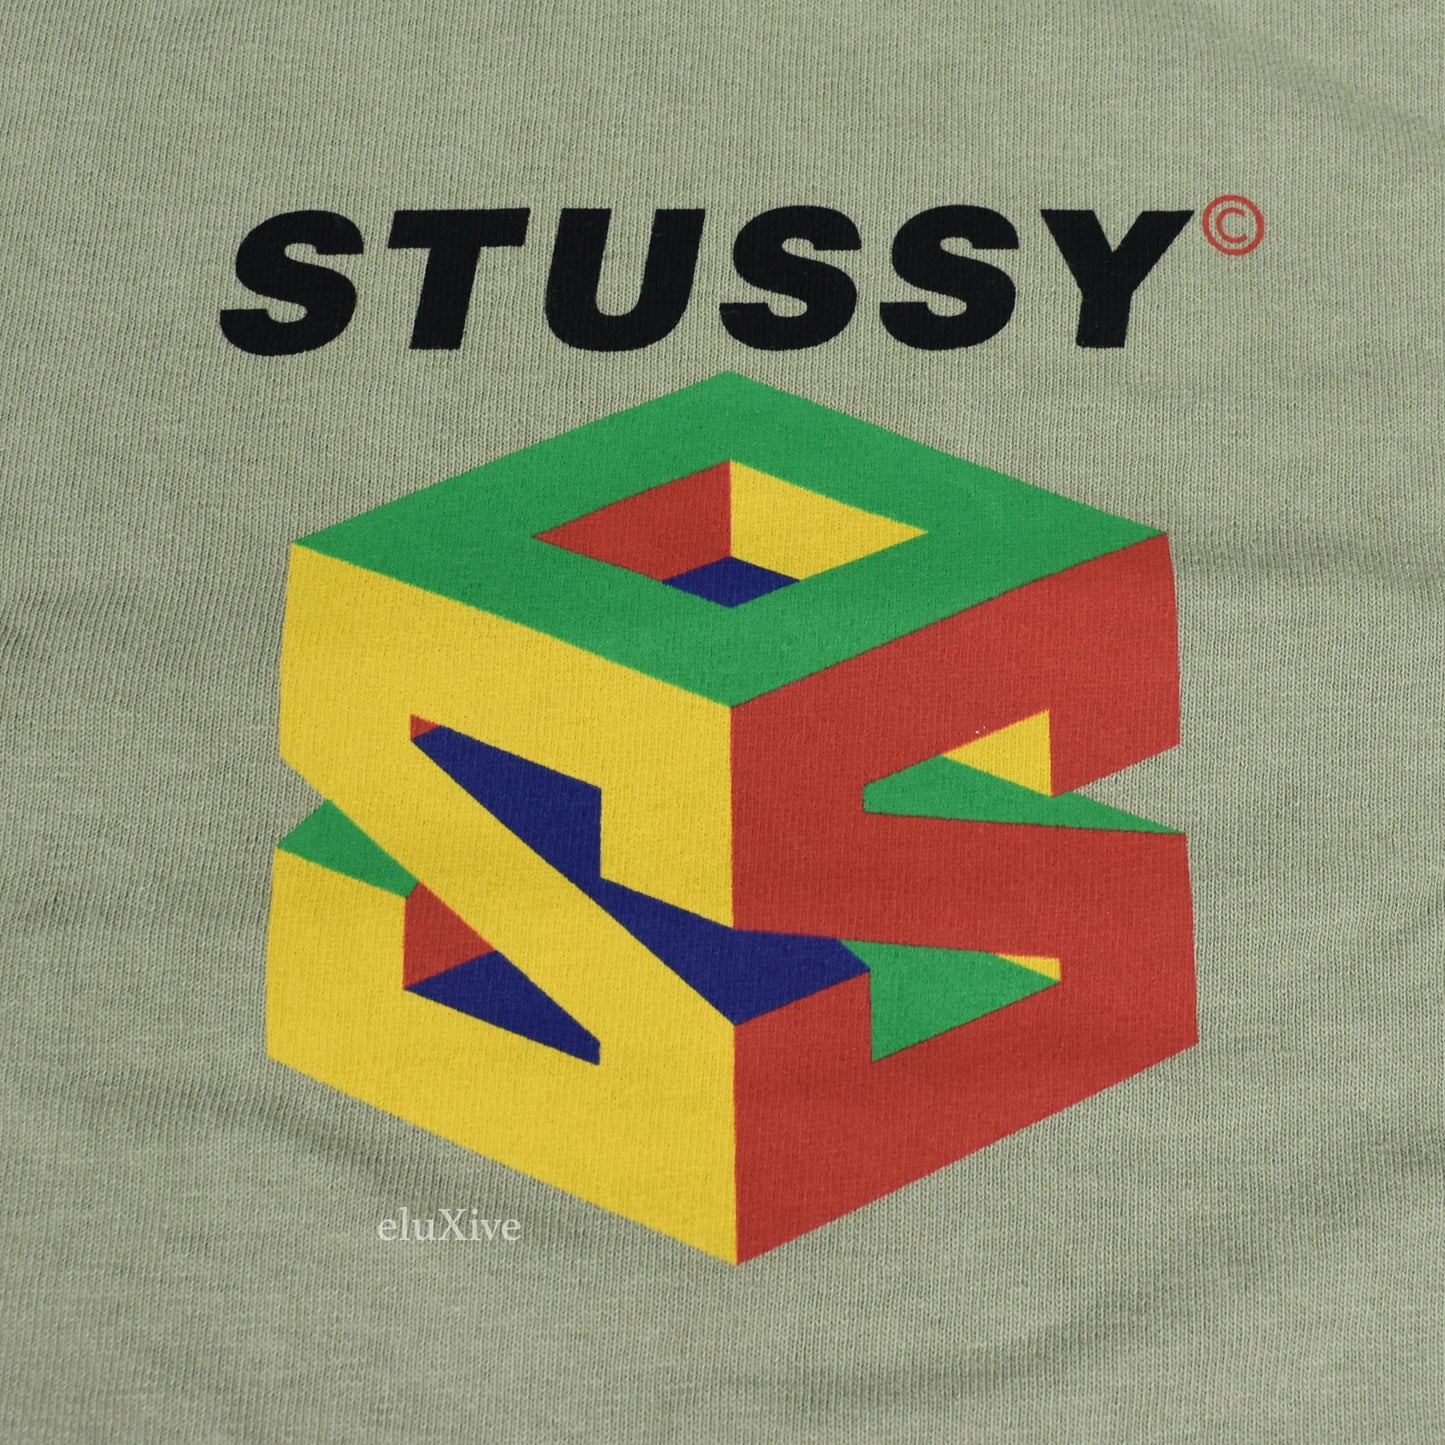 Stussy - Nintendo 64 Logo T-Shirt (Olive Green)